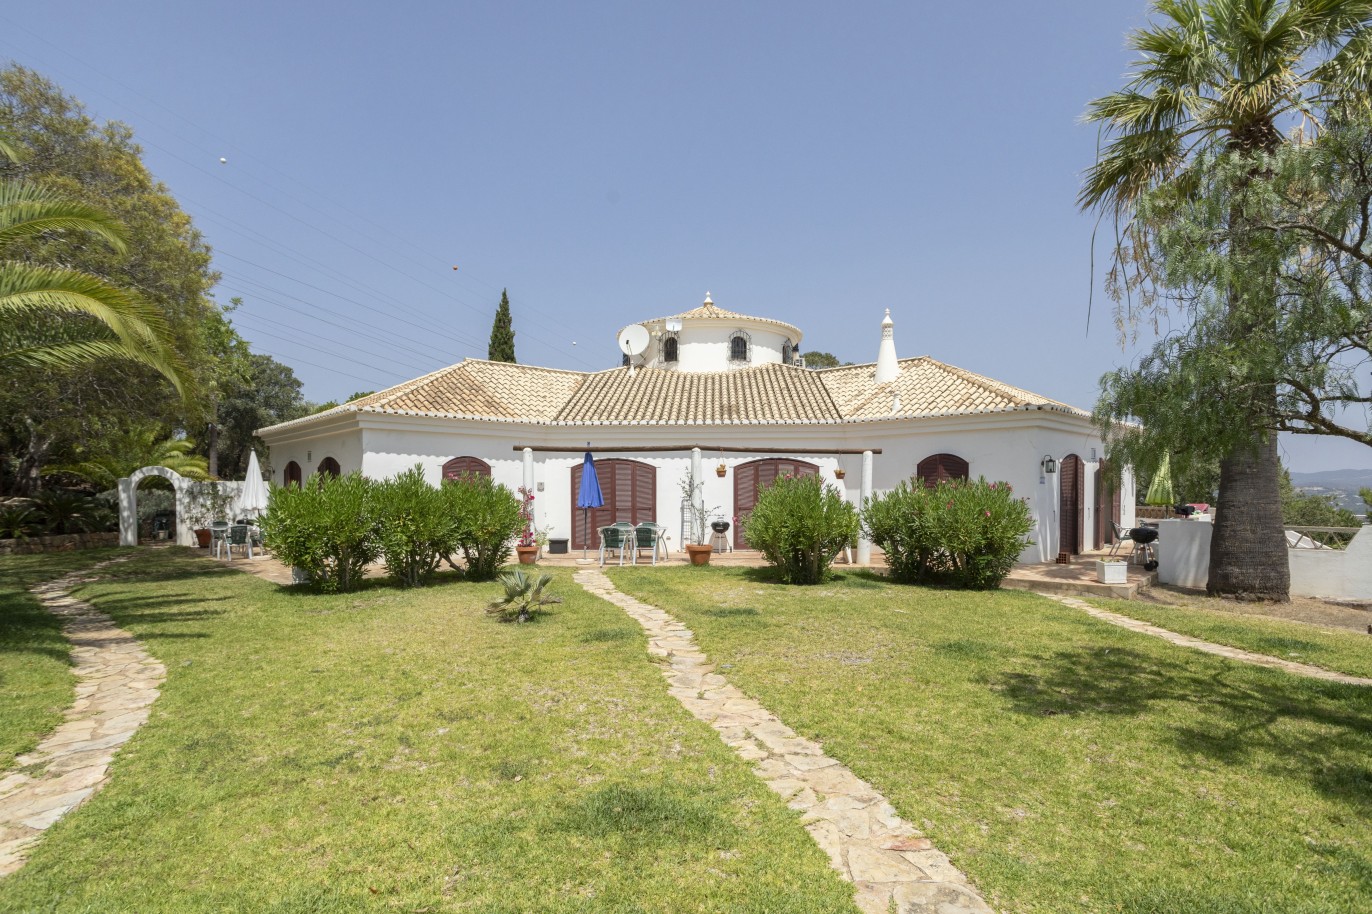 7 Bed Country Villa with swimming pool for sale in Estoi, Algarve_230973